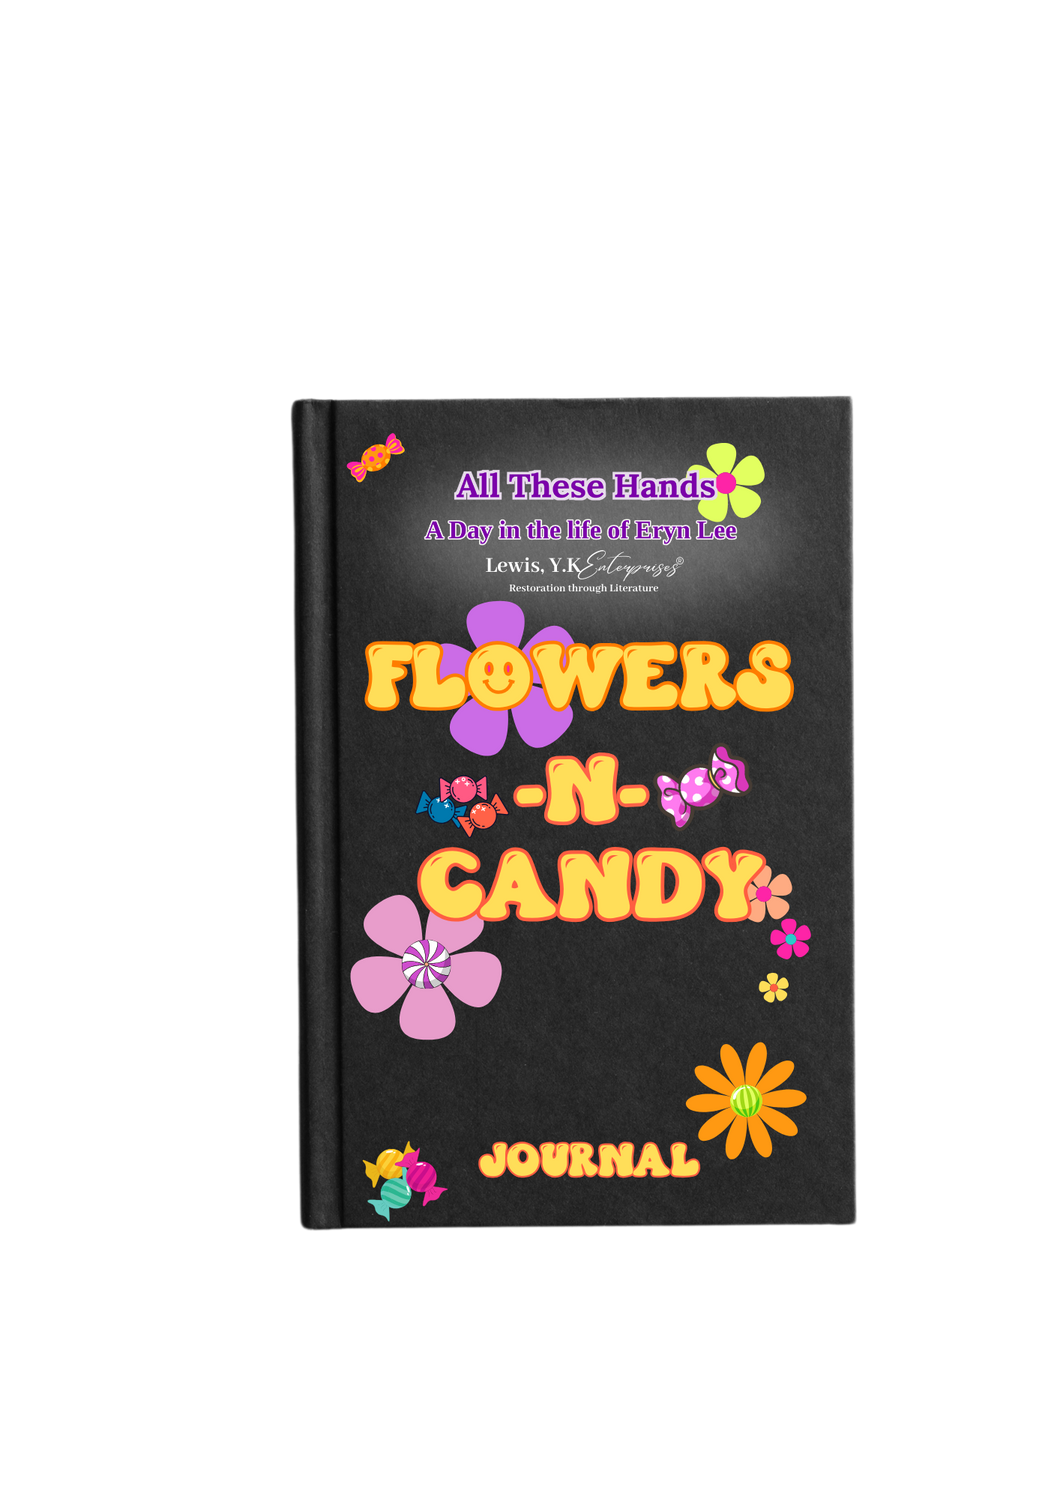 Flowers-n-Candy Journal by Lewis, Y. K